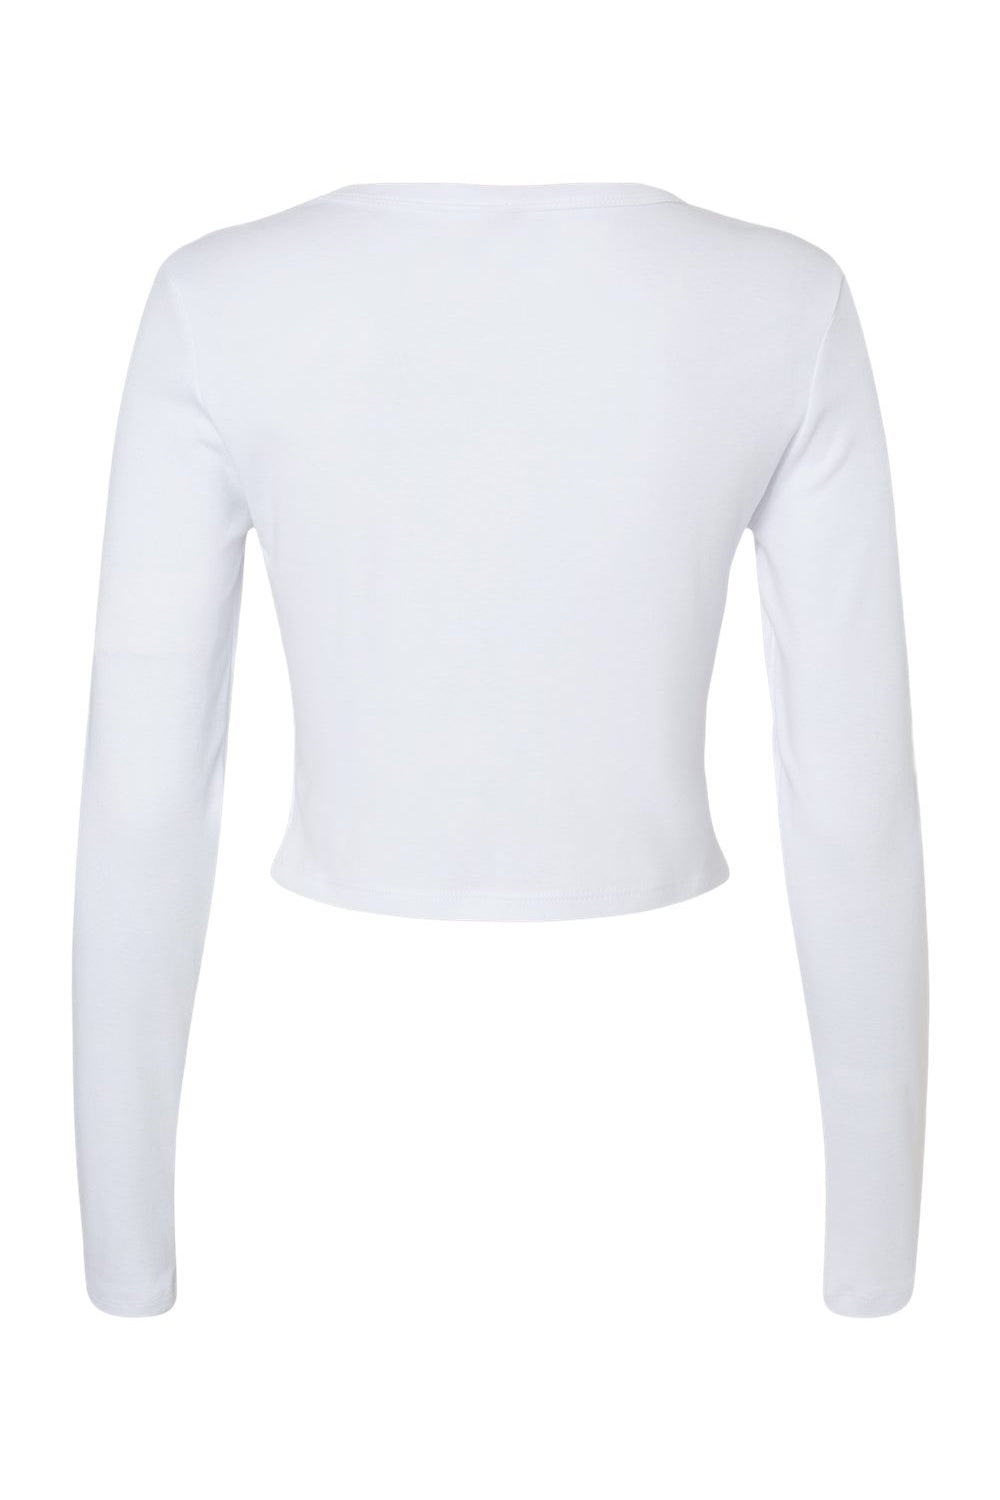 Bella + Canvas 1501 Womens Micro Rib Long Sleeve Crewneck T-Shirt Solid White Blend Flat Back